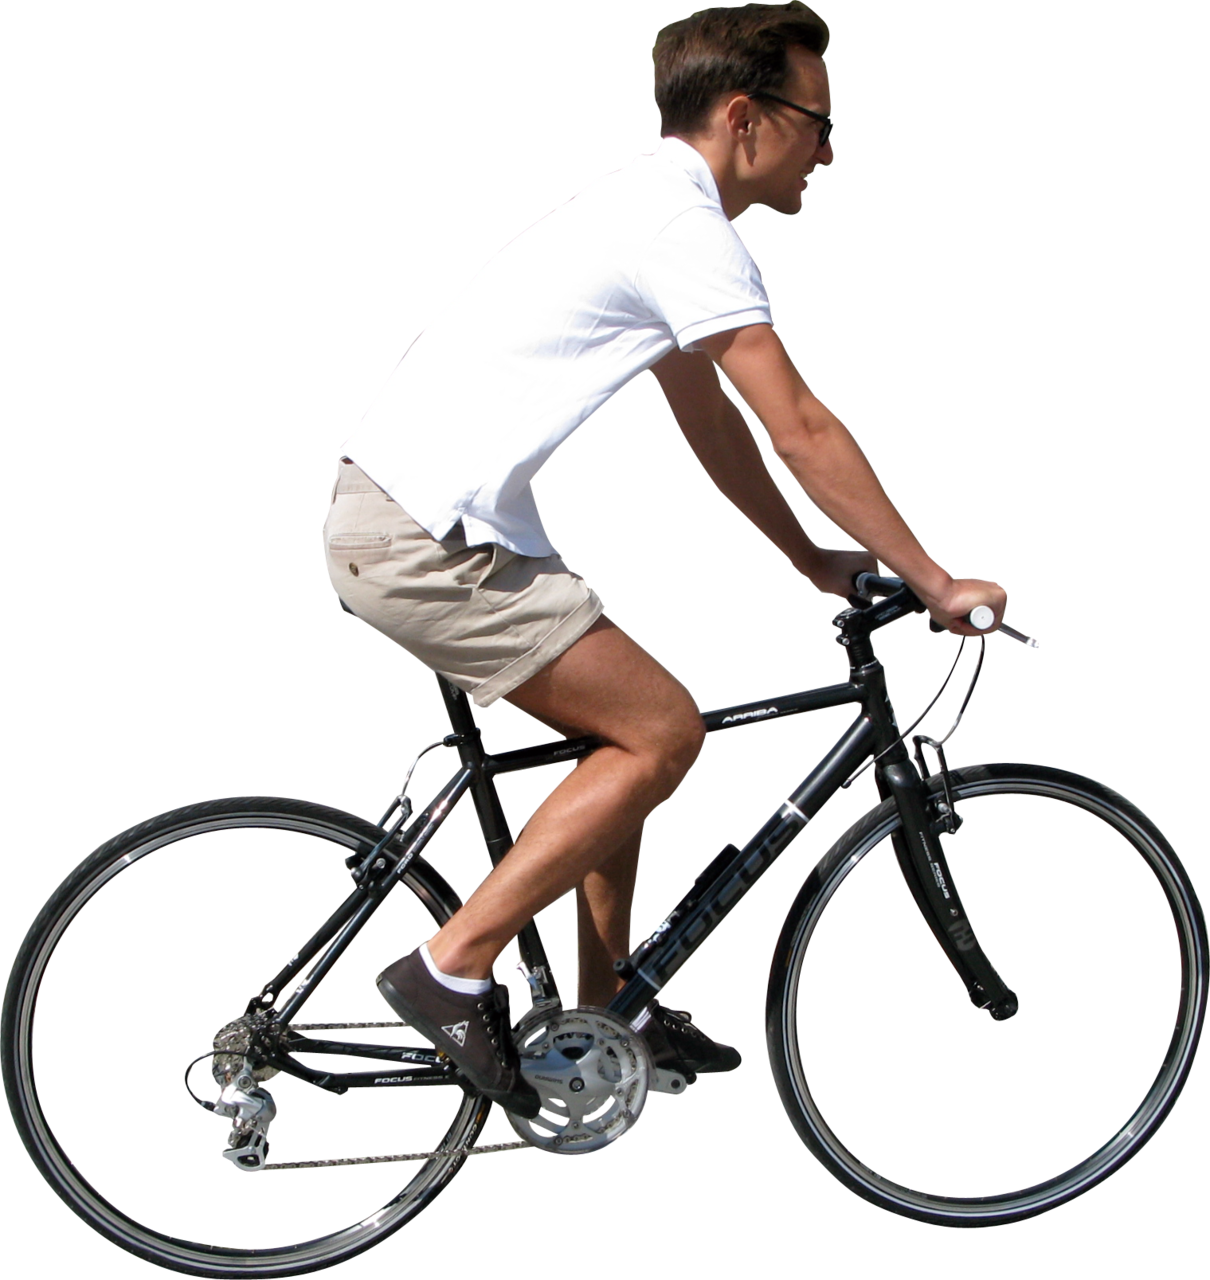 Casual Cyclist Riding Bike